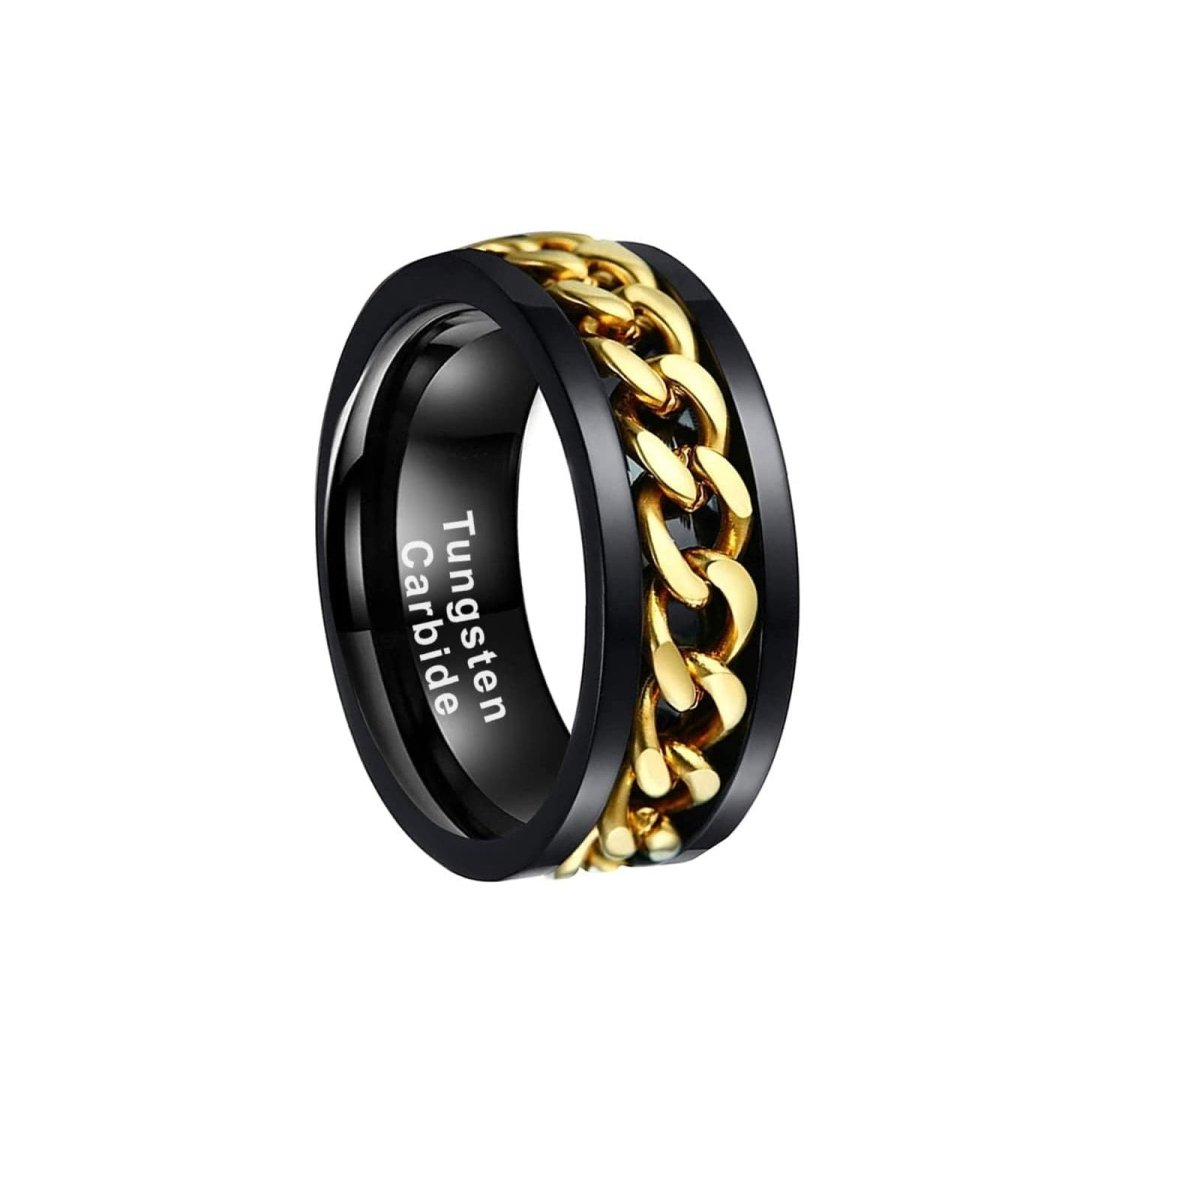 Gold Spinner - Black and Gold Tungsten Spinner Fidget Ring